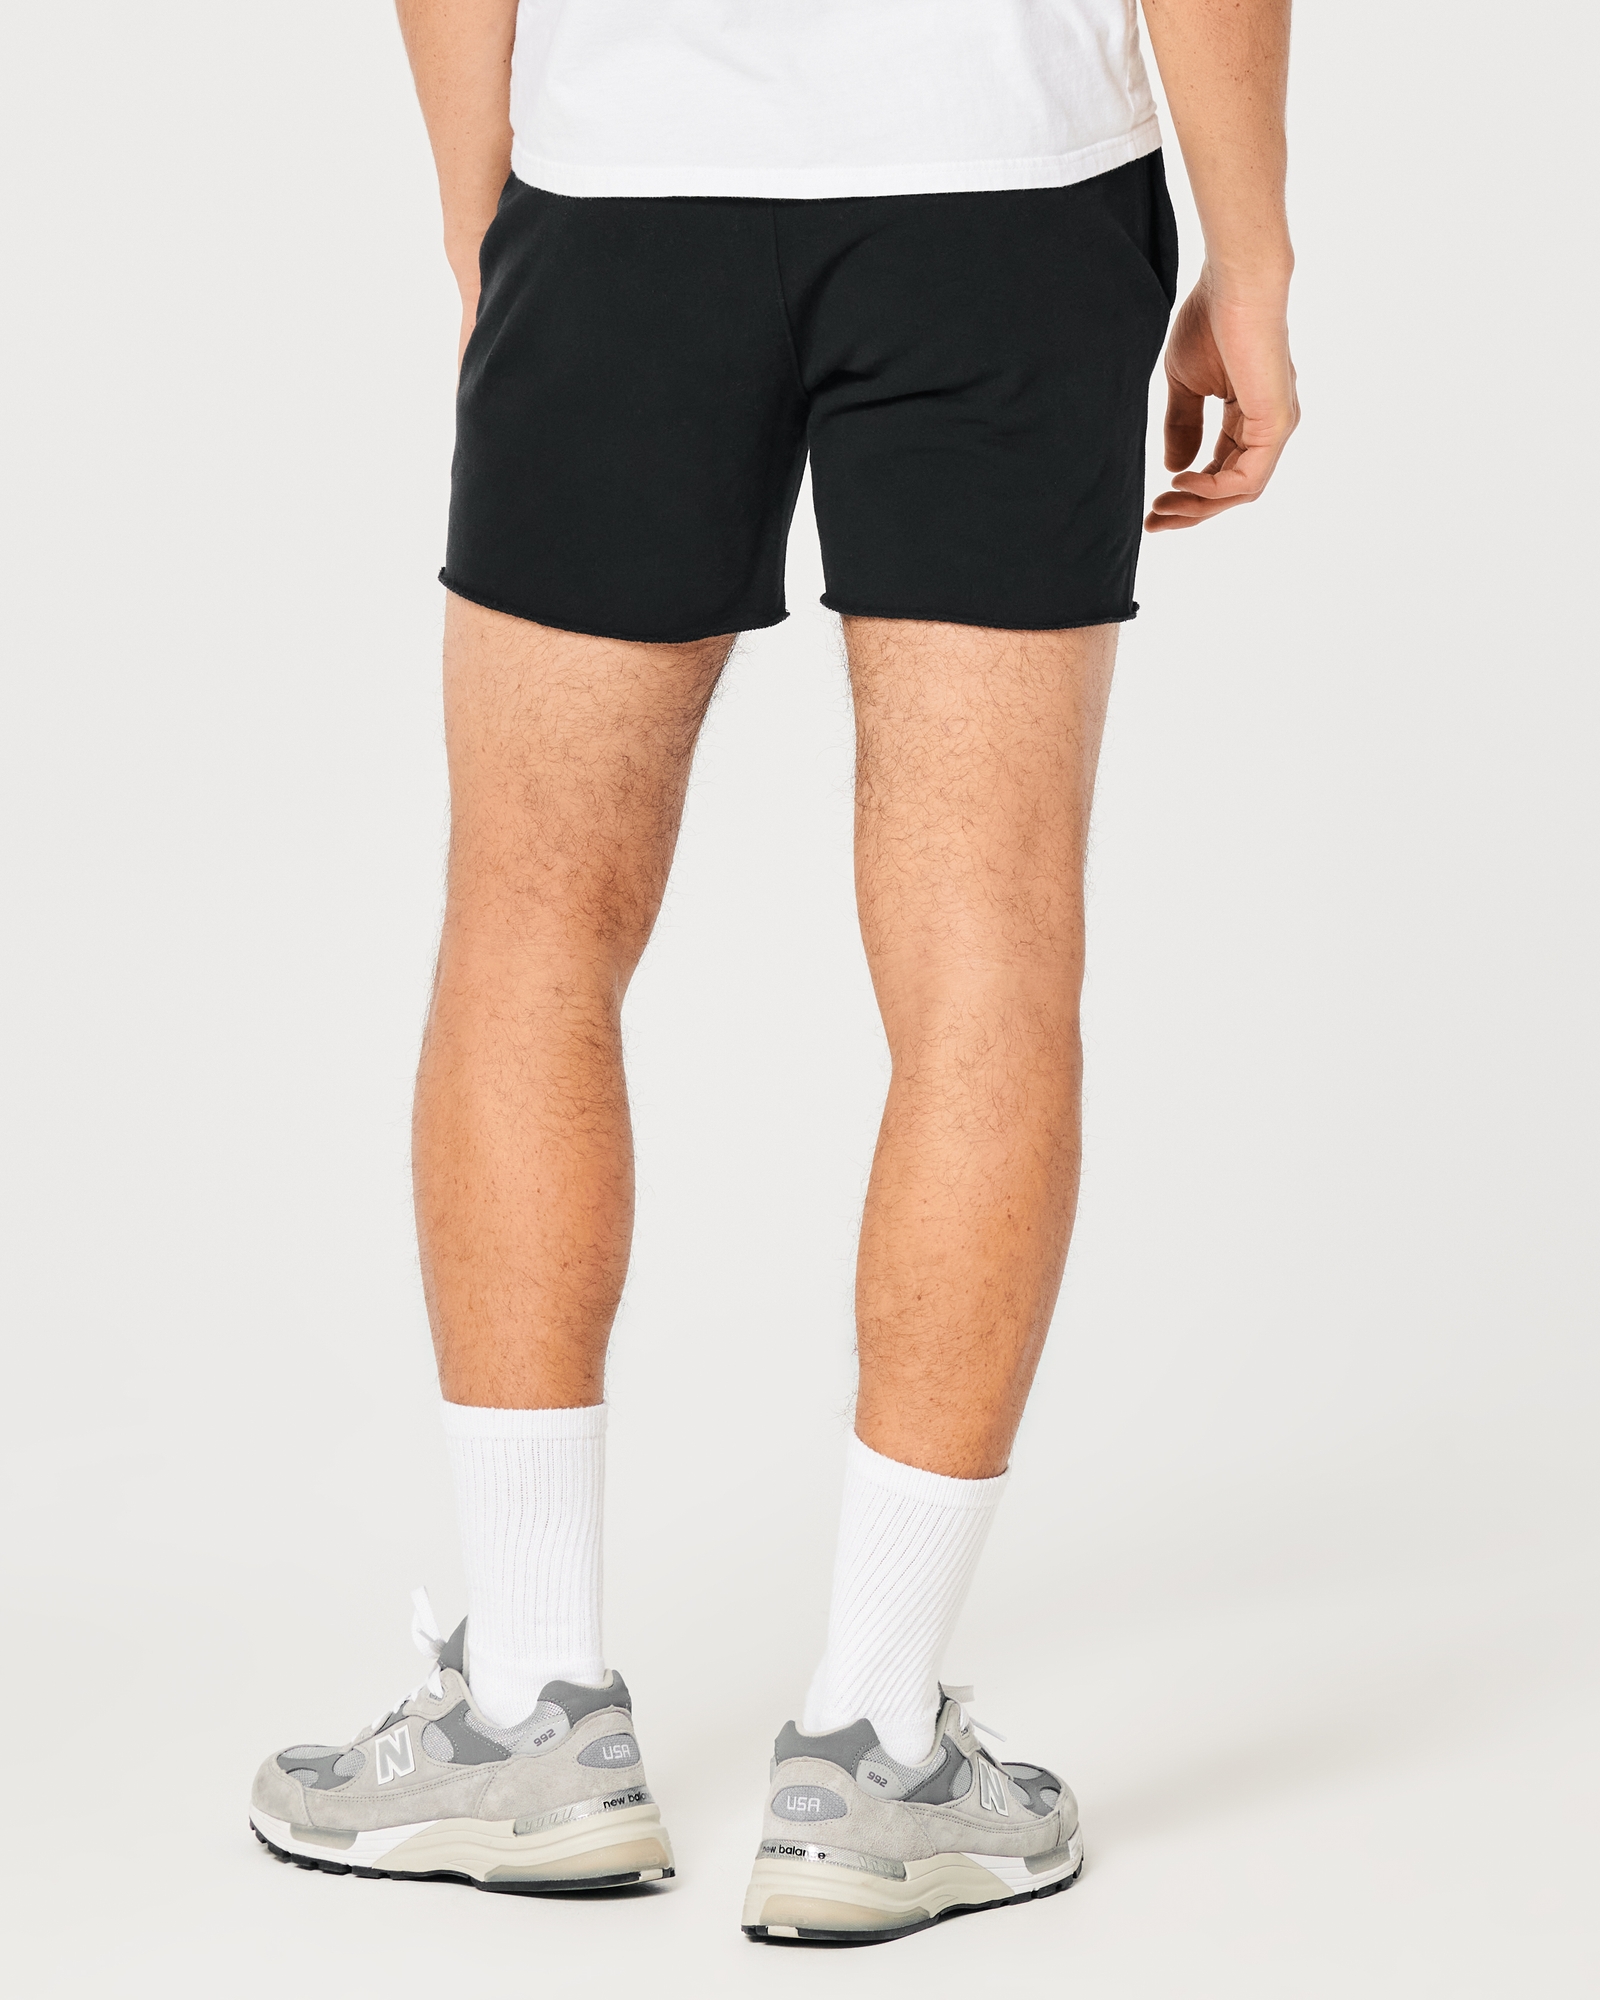 Hollister Men's Sport Fleece Shorts (Inseam 6.5) HOM-40